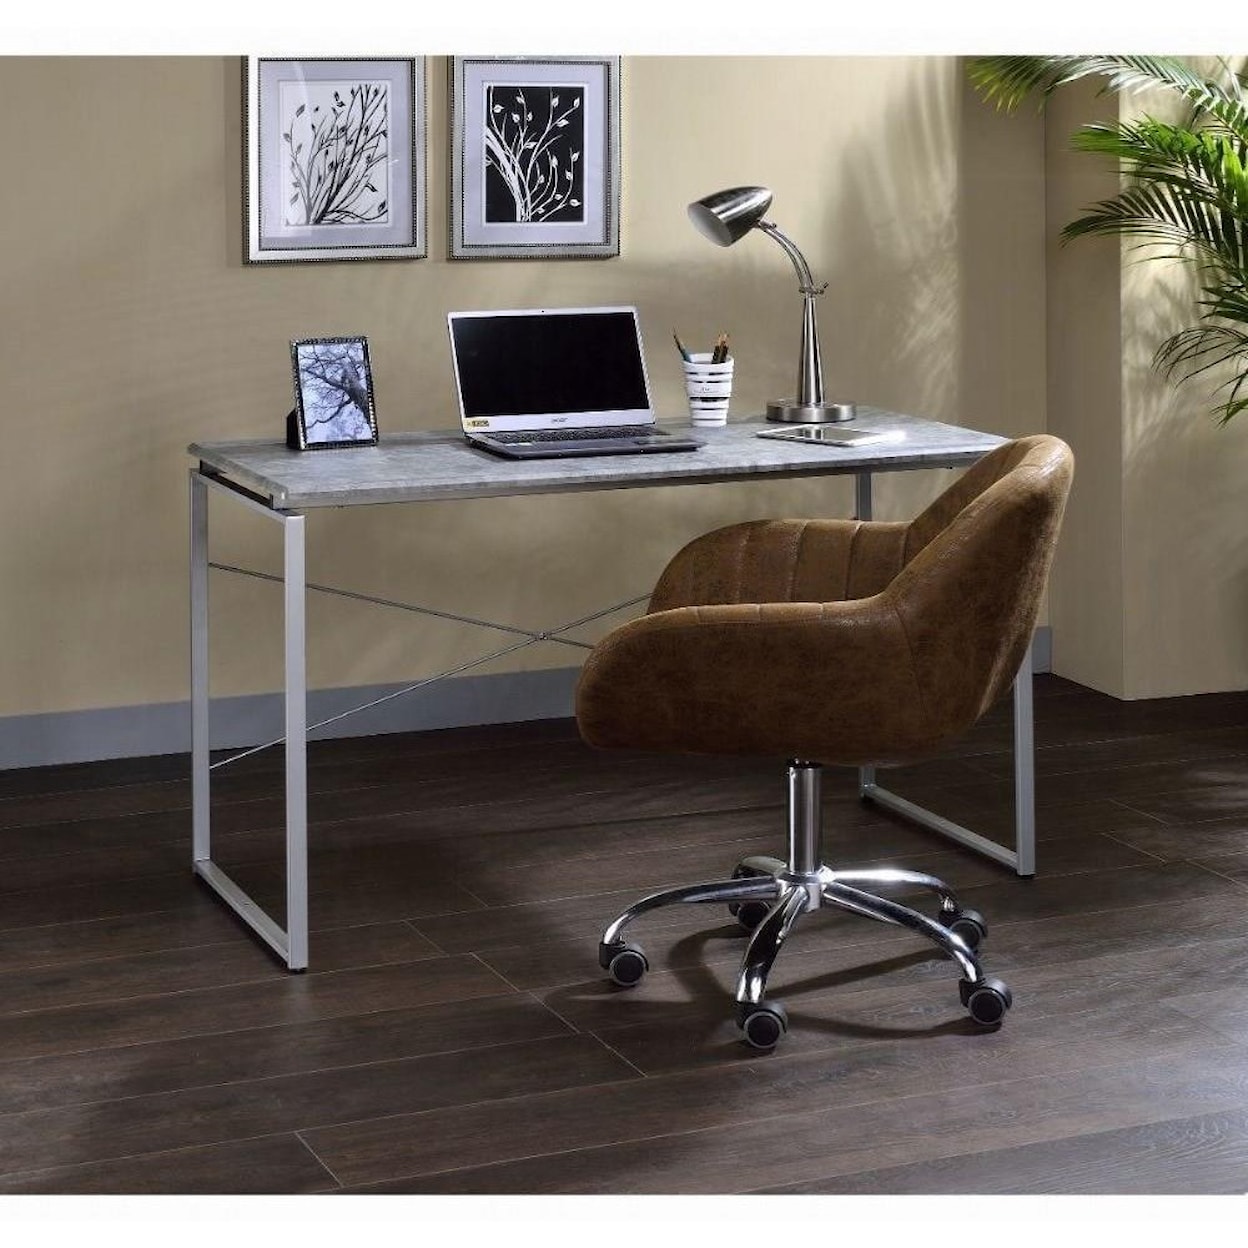 Acme Furniture Jurgen Desk